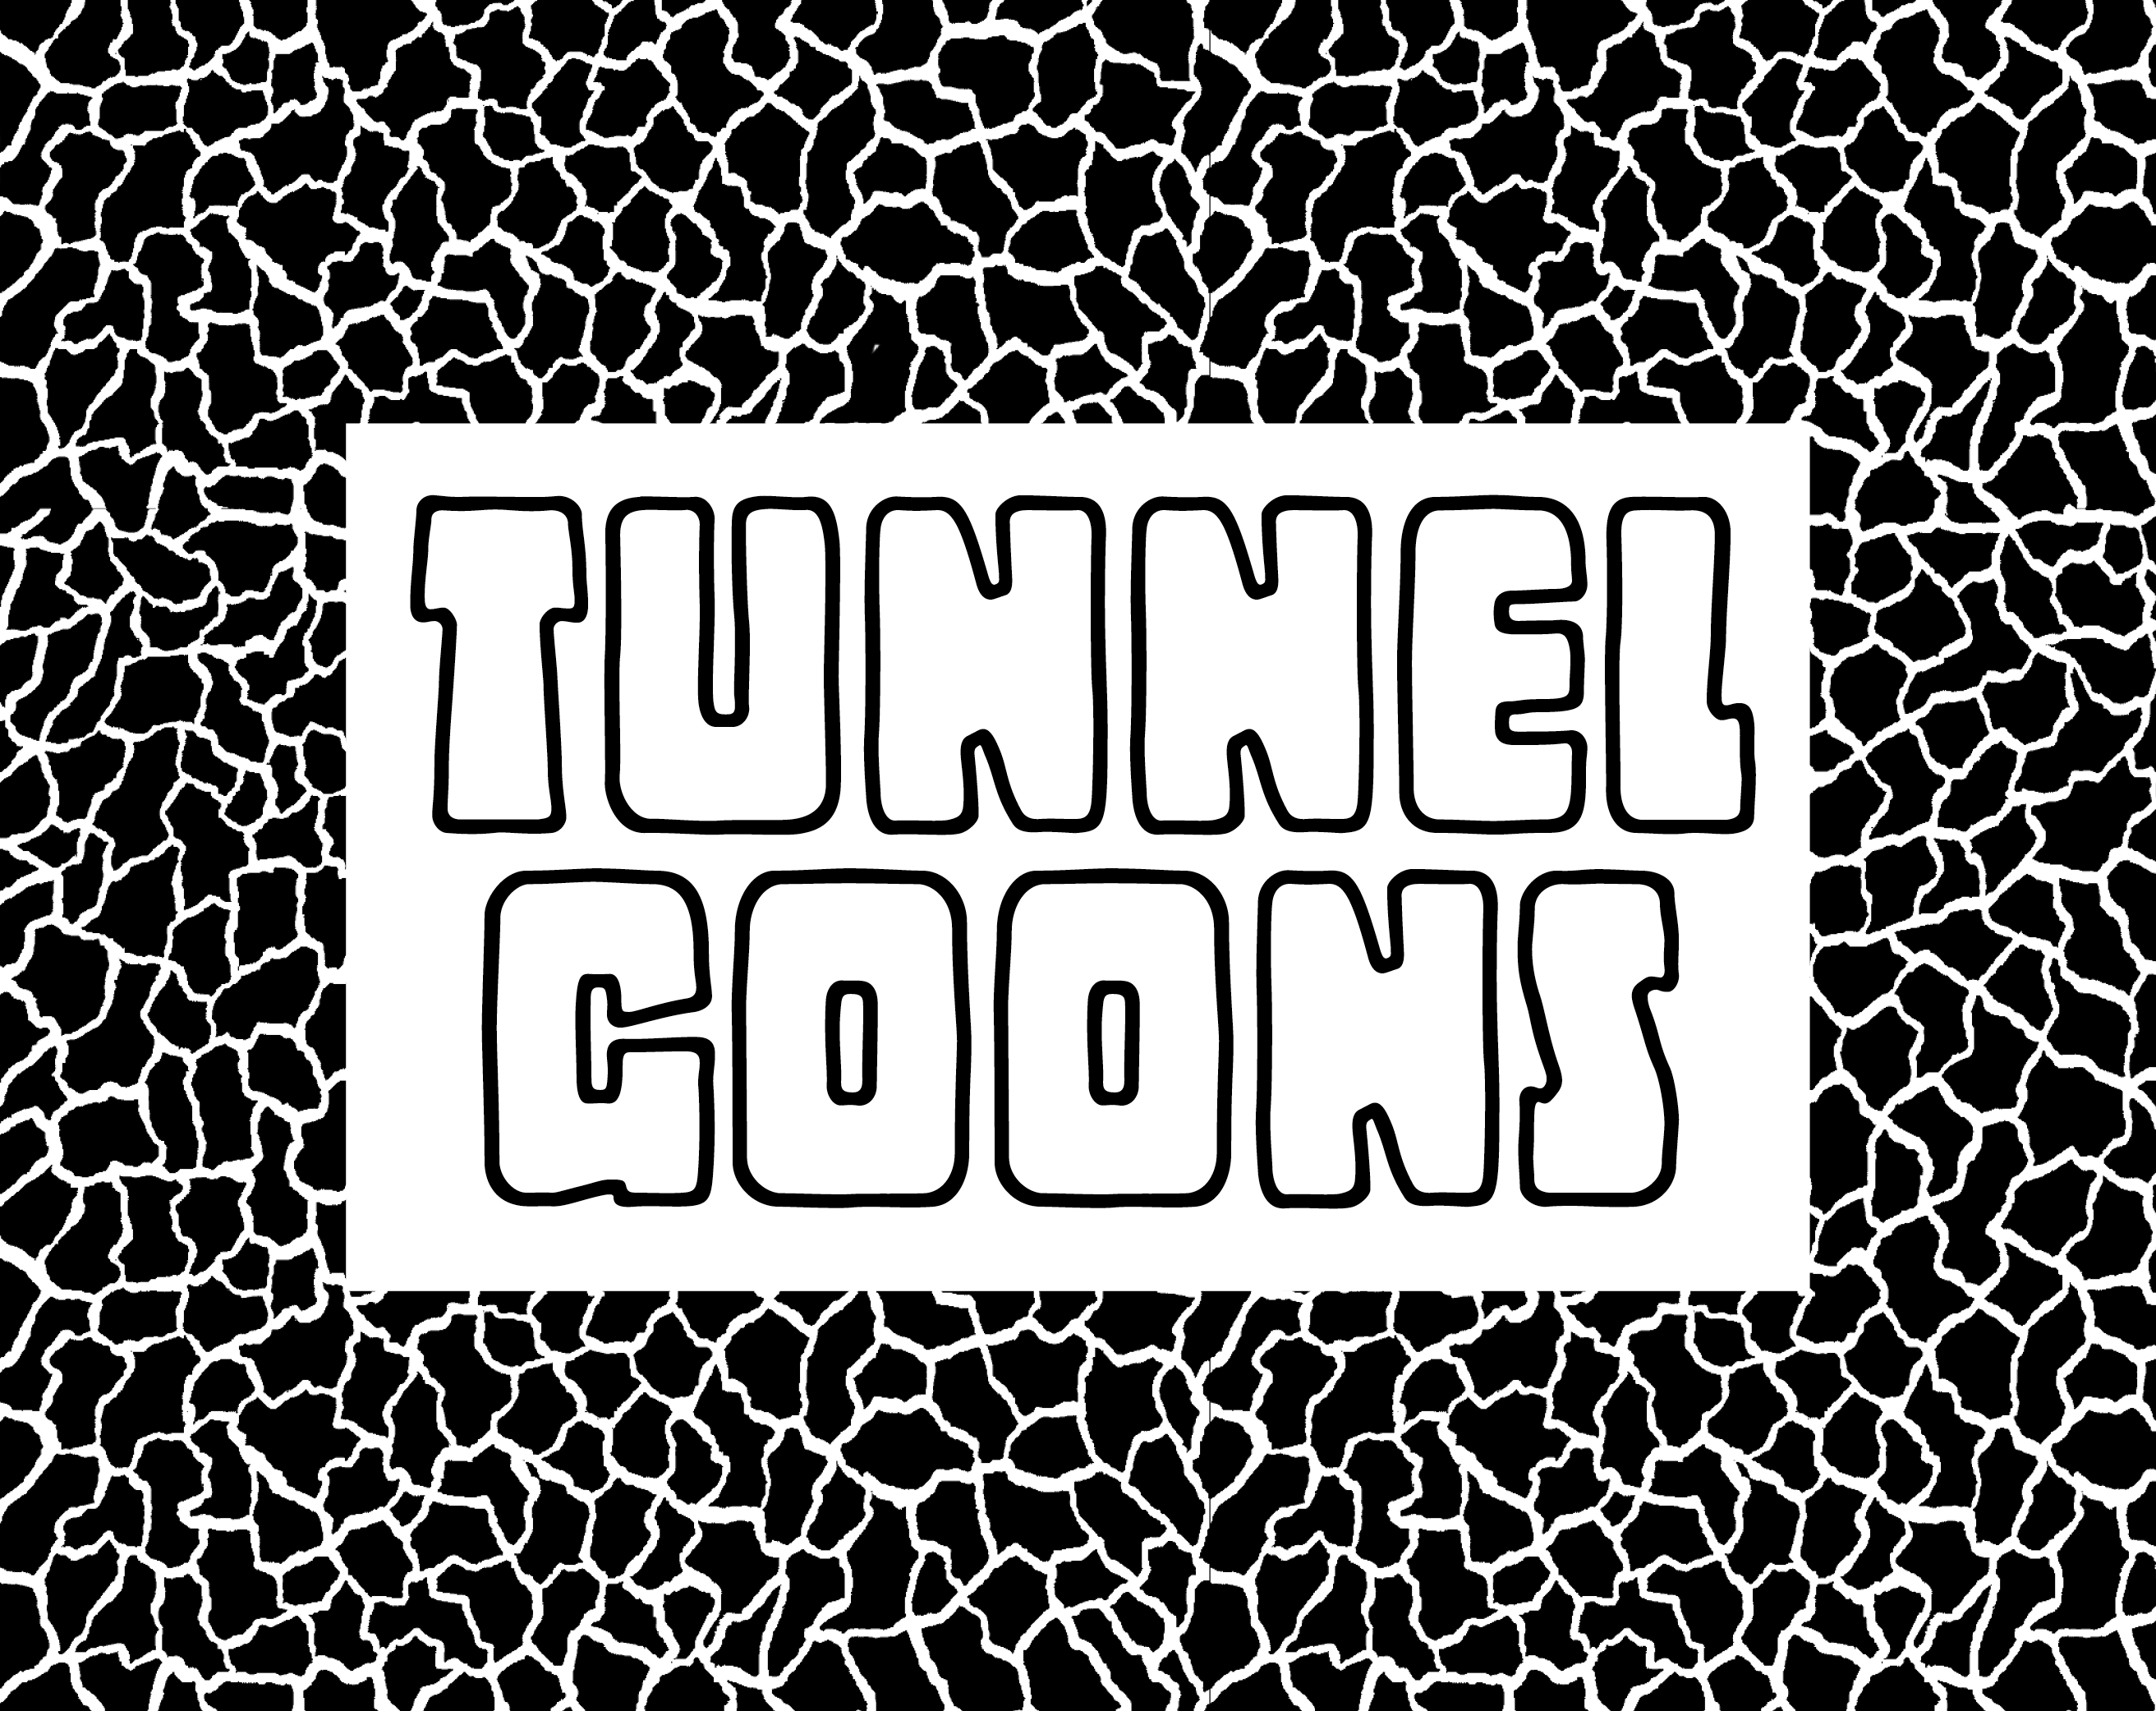 Tunnel Goons